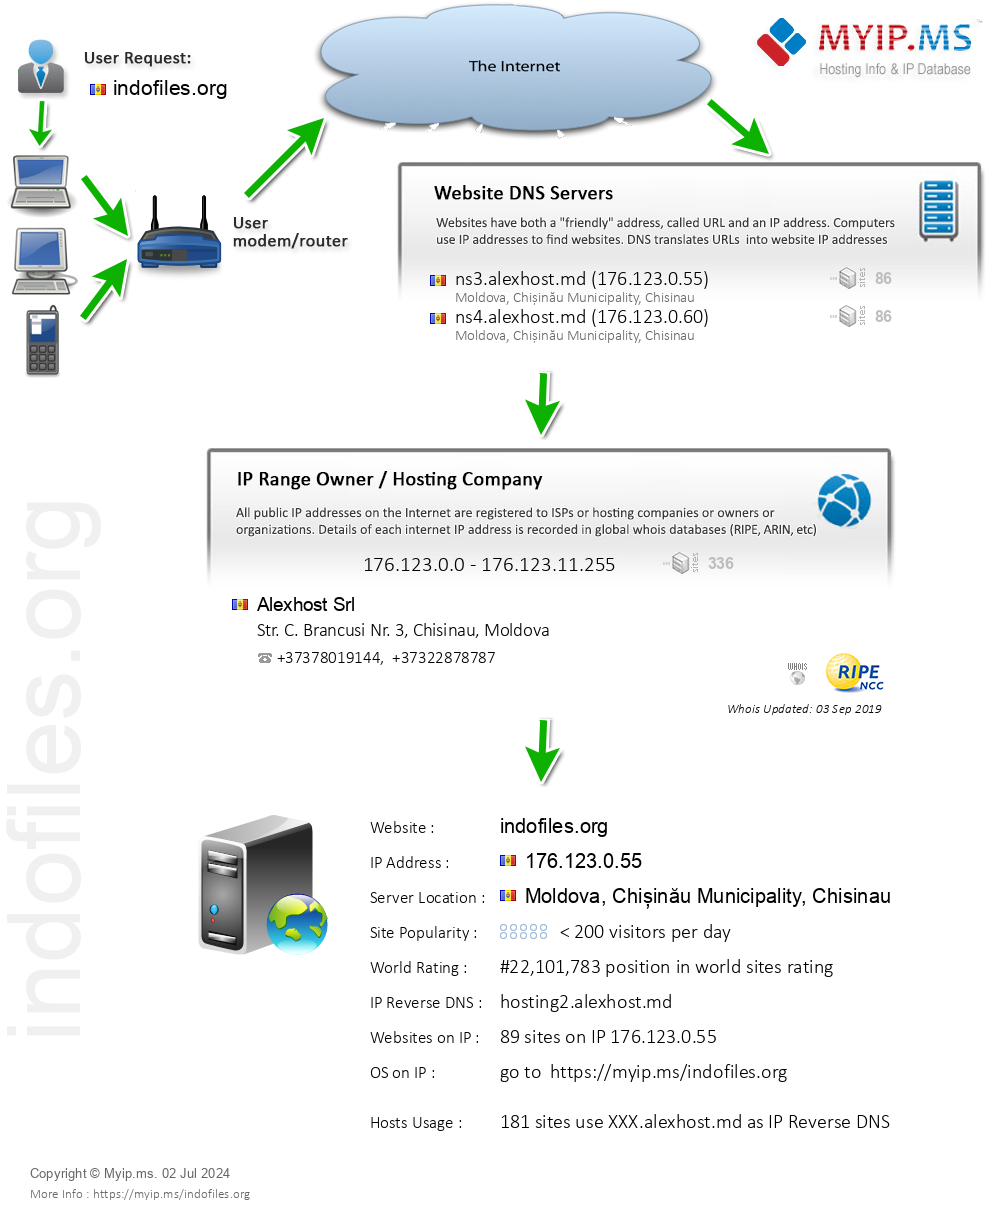 Indofiles.org - Website Hosting Visual IP Diagram